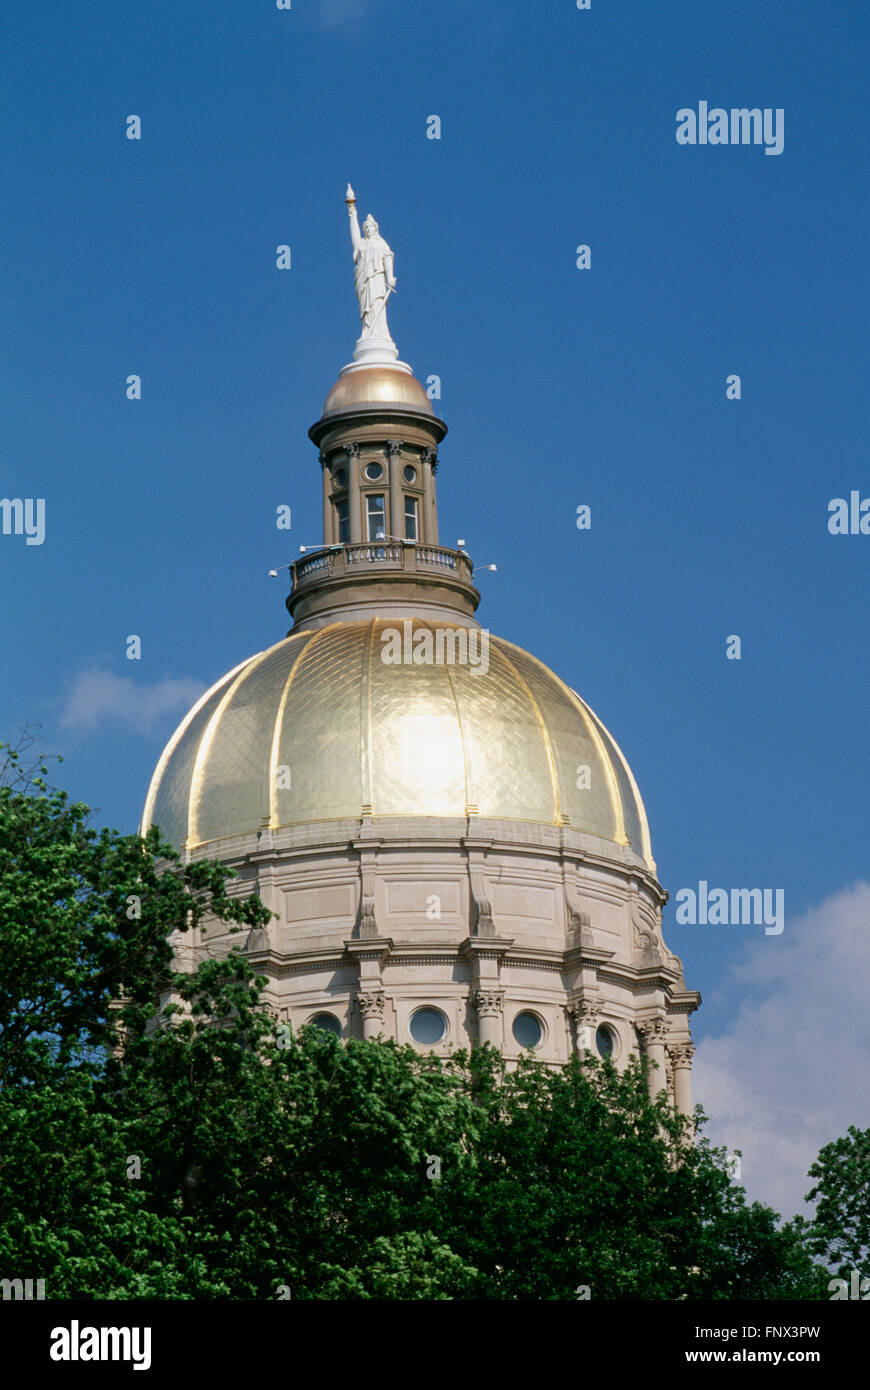 Dome Of The Georgia State Capitol Building, Atlanta, Georgia, United States Of America Stock Photo